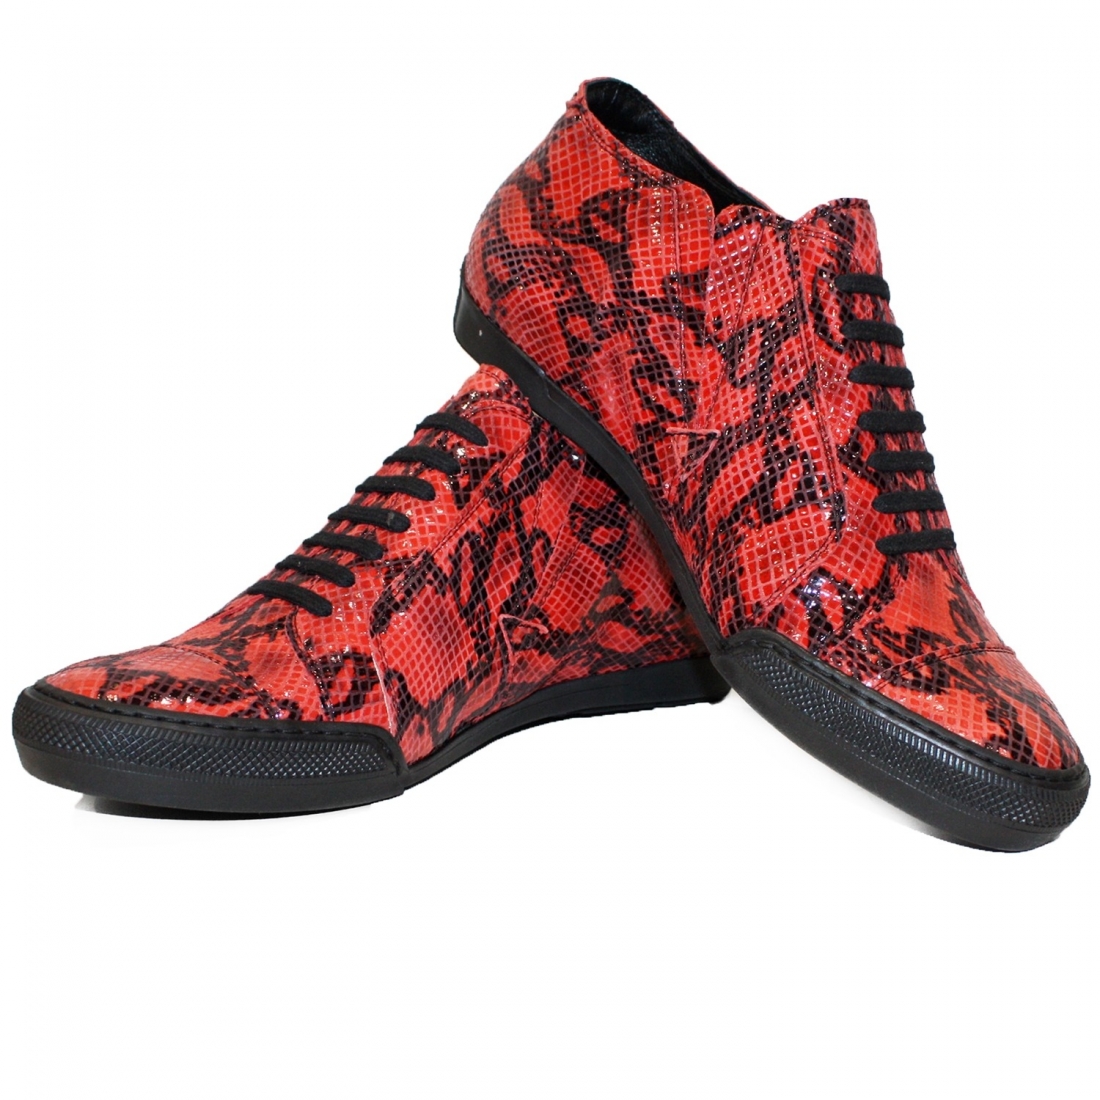 Modello Luherro - Buty Casual - Handmade Colorful Italian Leather Shoes